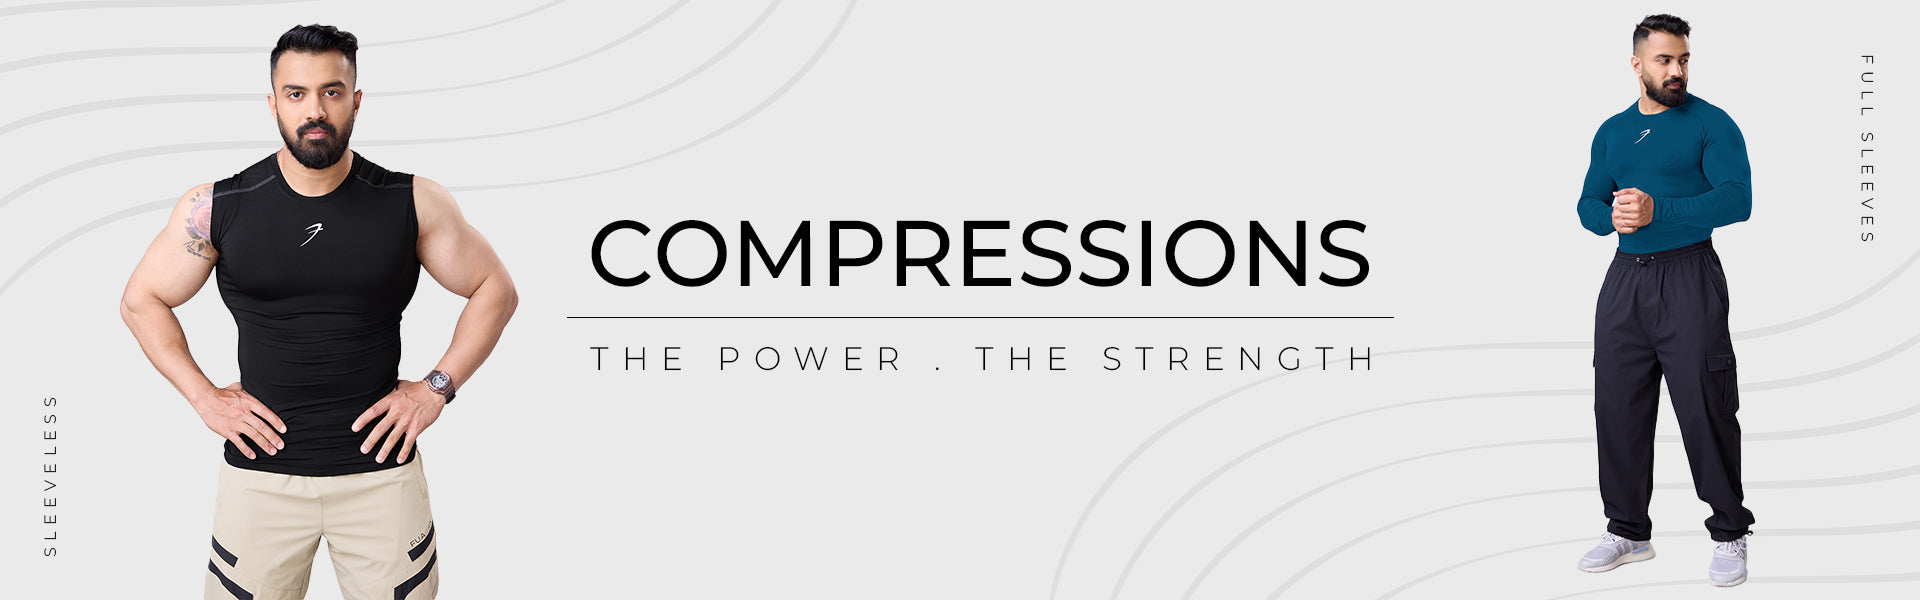 Compression_new_launch_web